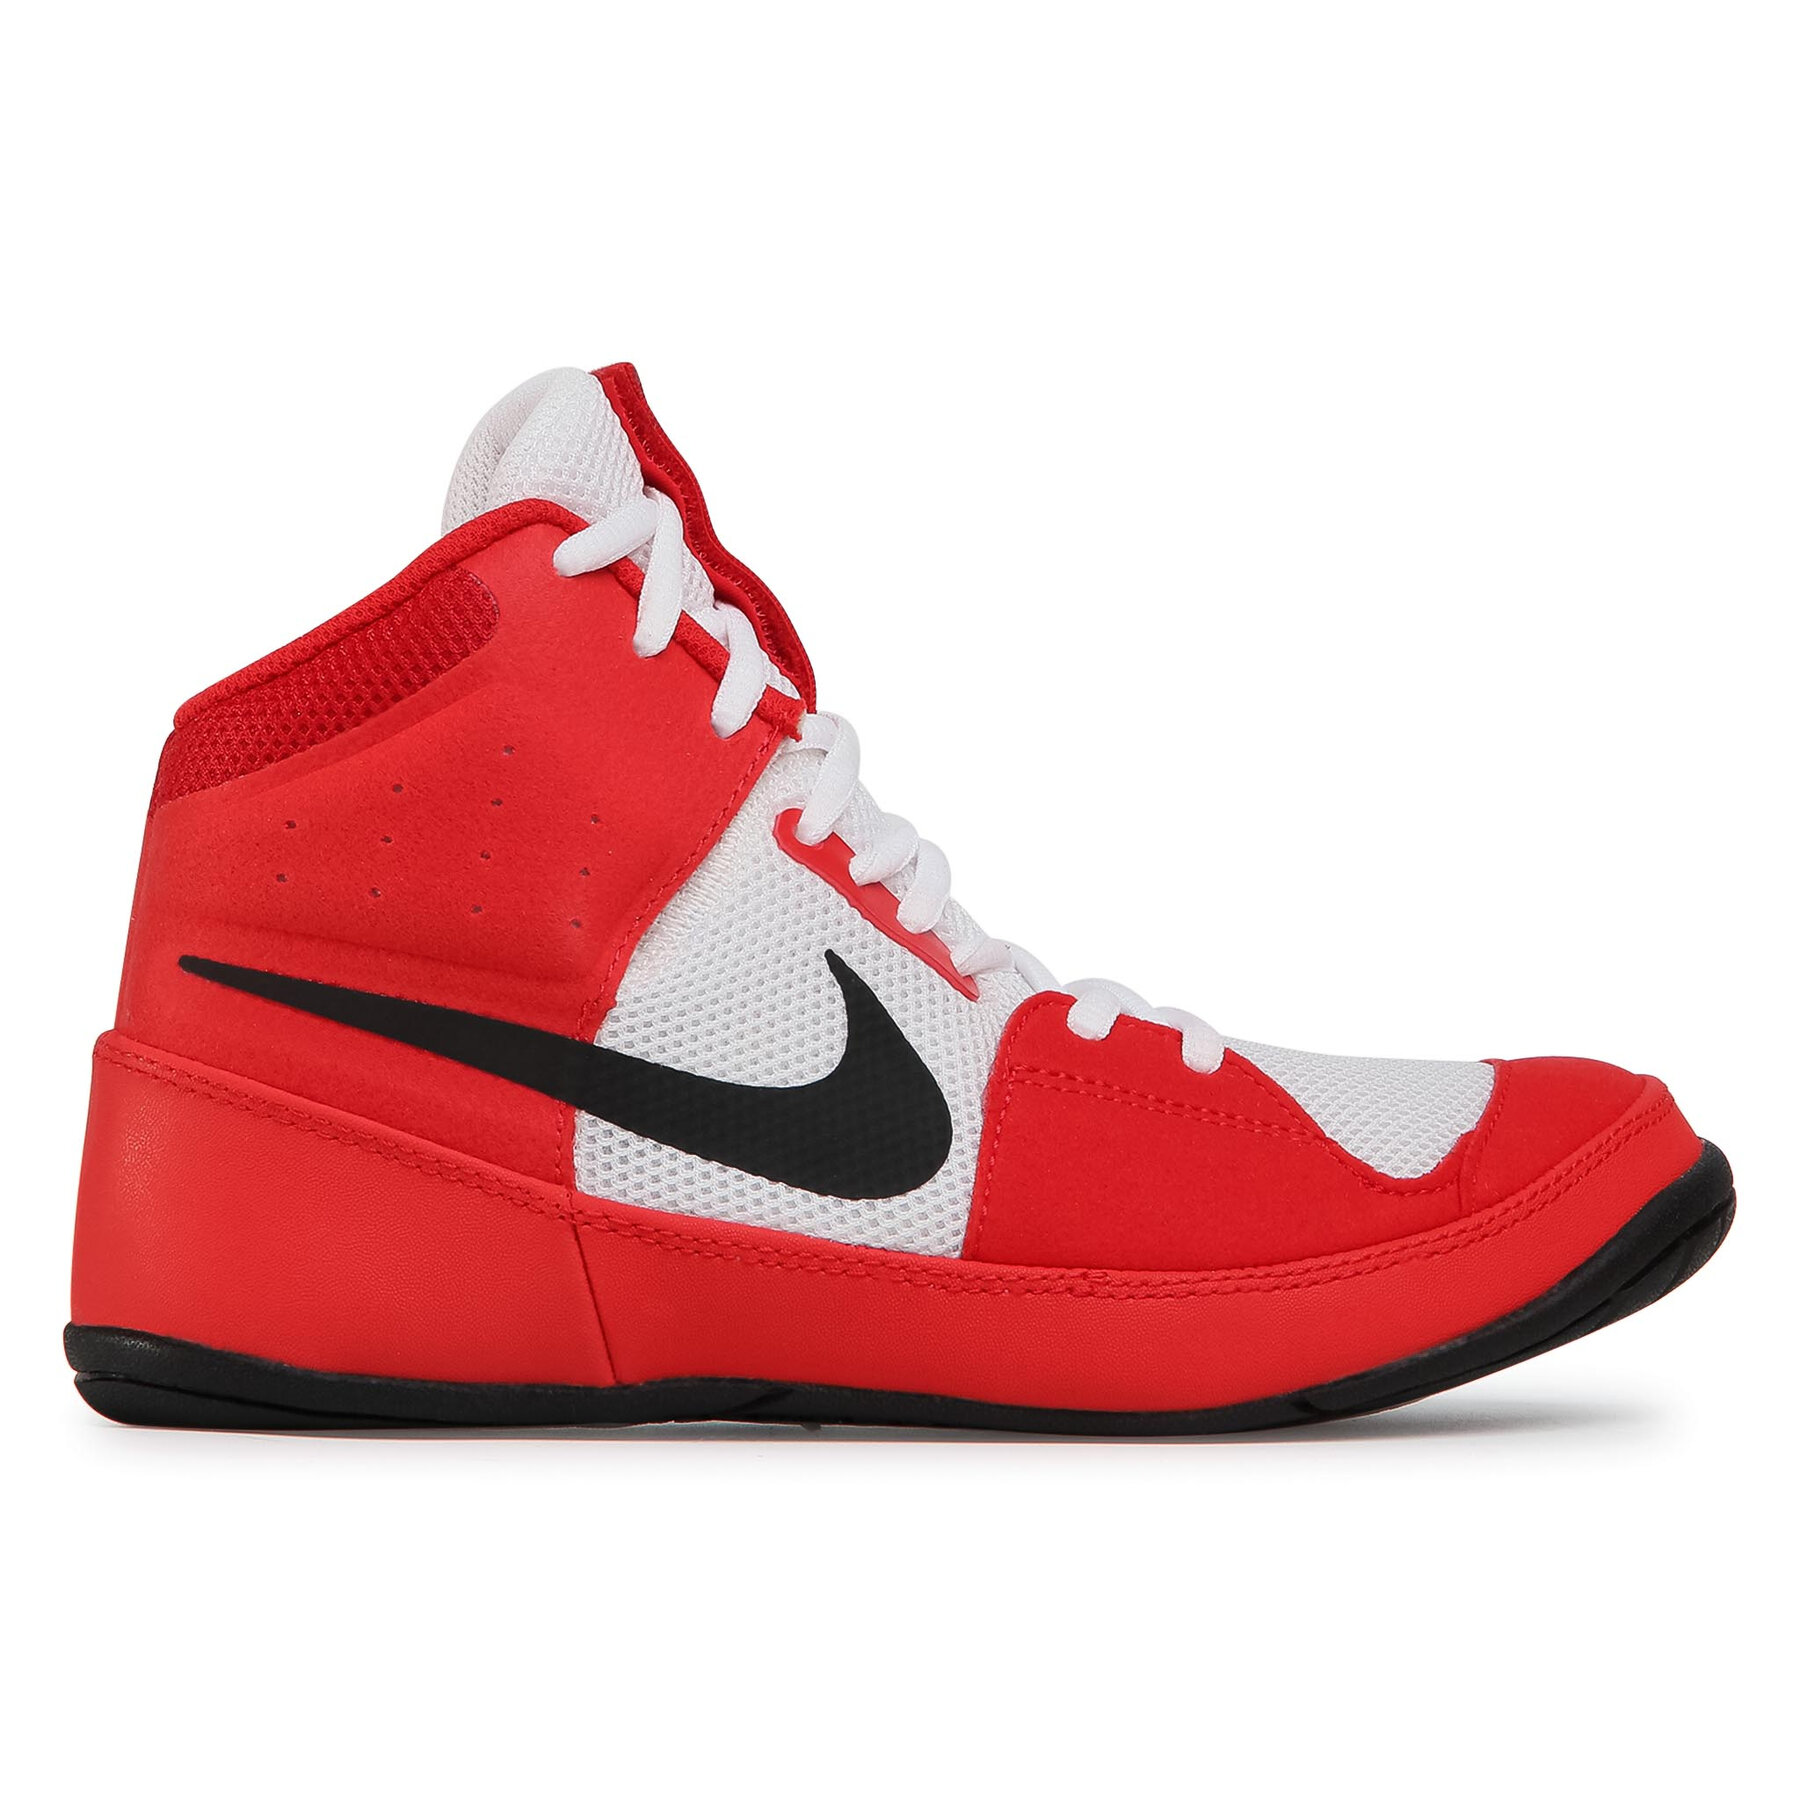 Schuhe Nike Fury A02416 601 University Red/Black/White von Nike